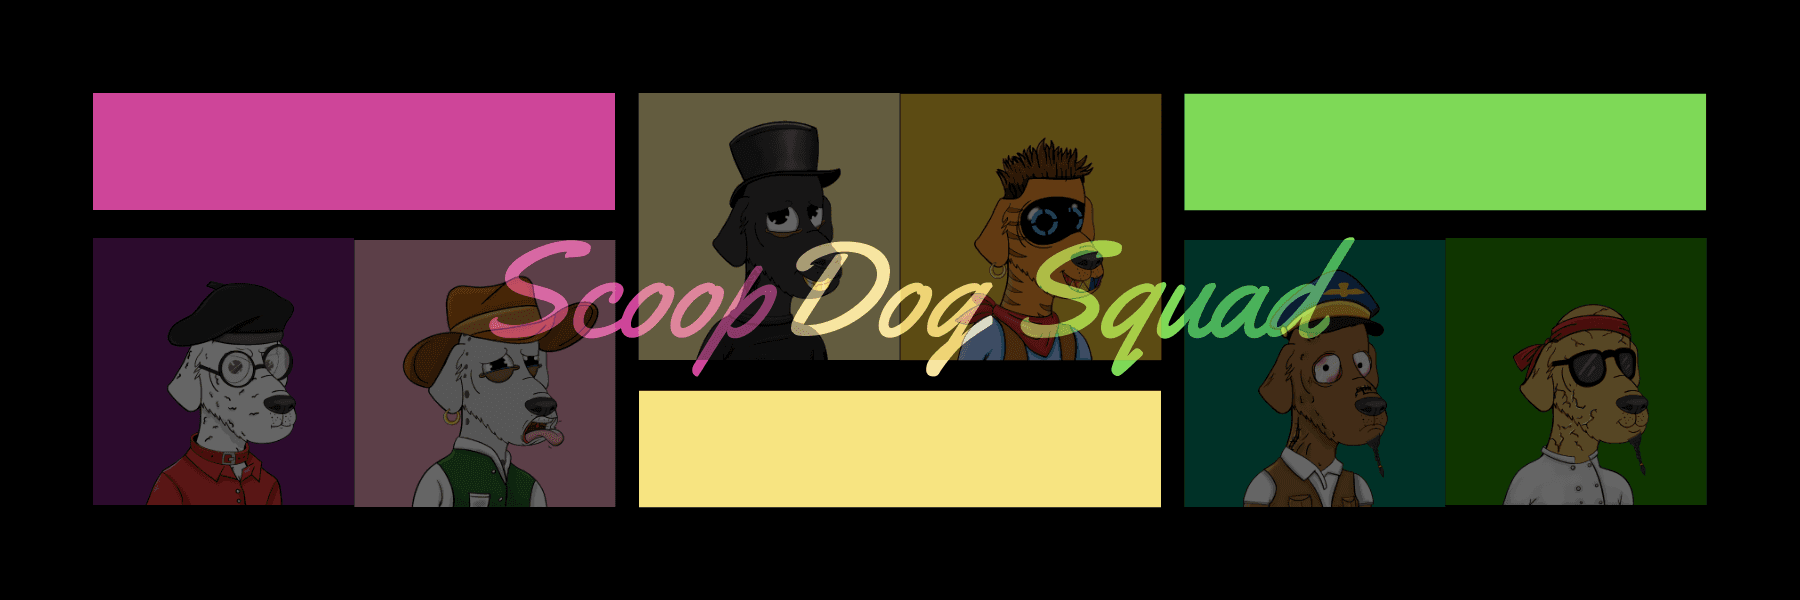 ScoopDog Squad